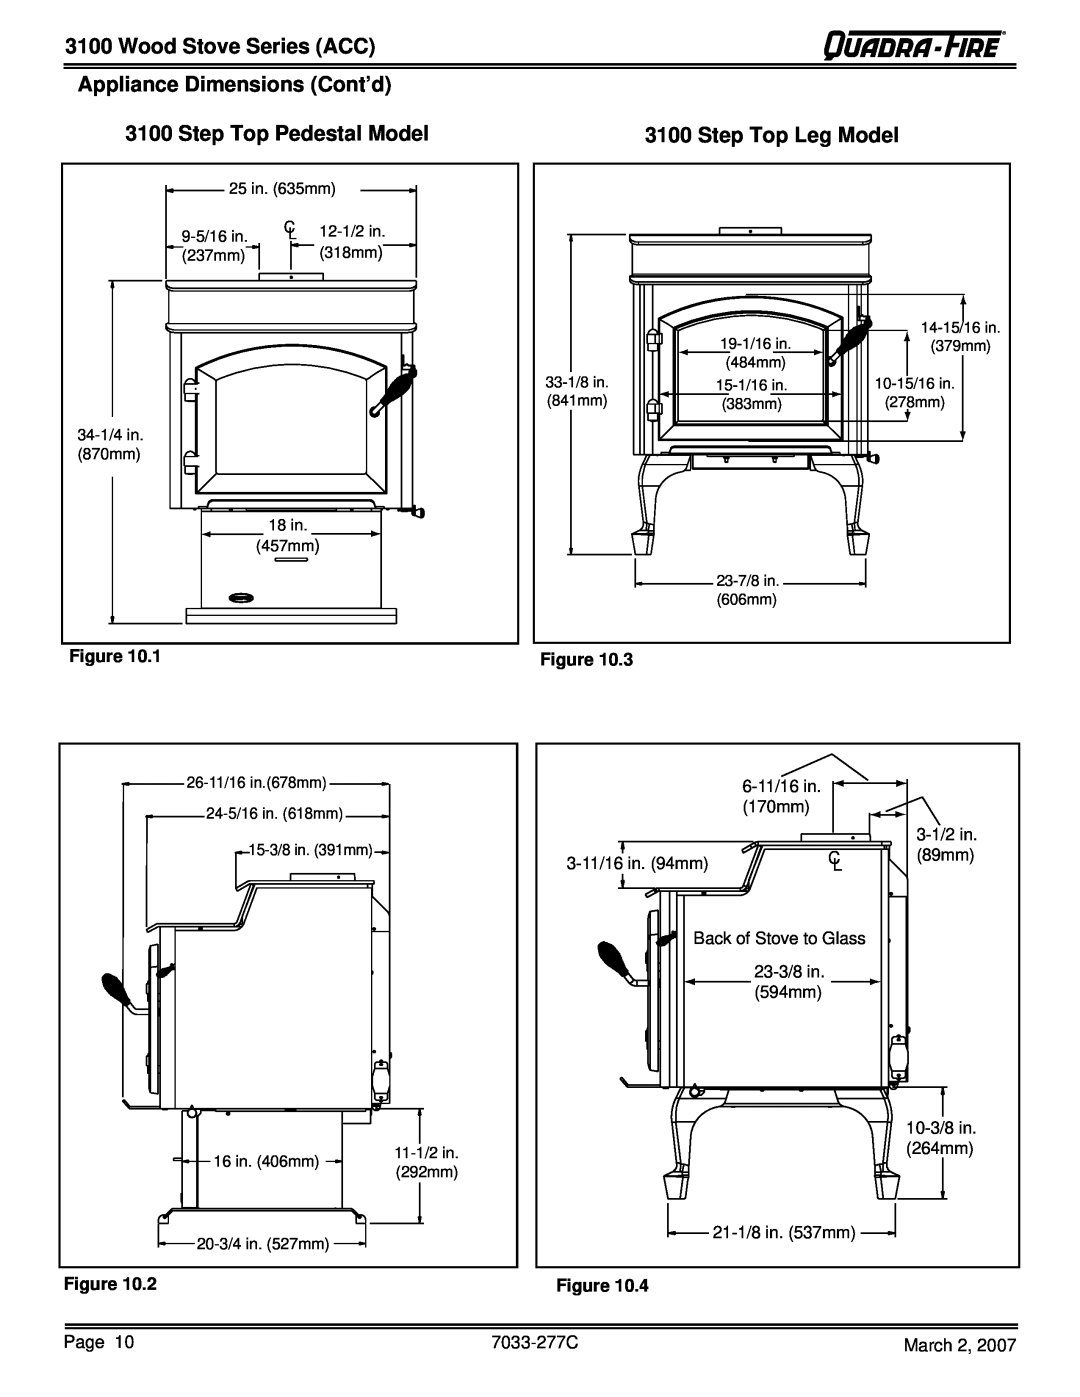 Quadra-Fire 31M-ACC-NT Wood Stove Series ACC, Appliance Dimensions Cont’d, Step Top Pedestal Model, Step Top Leg Model 